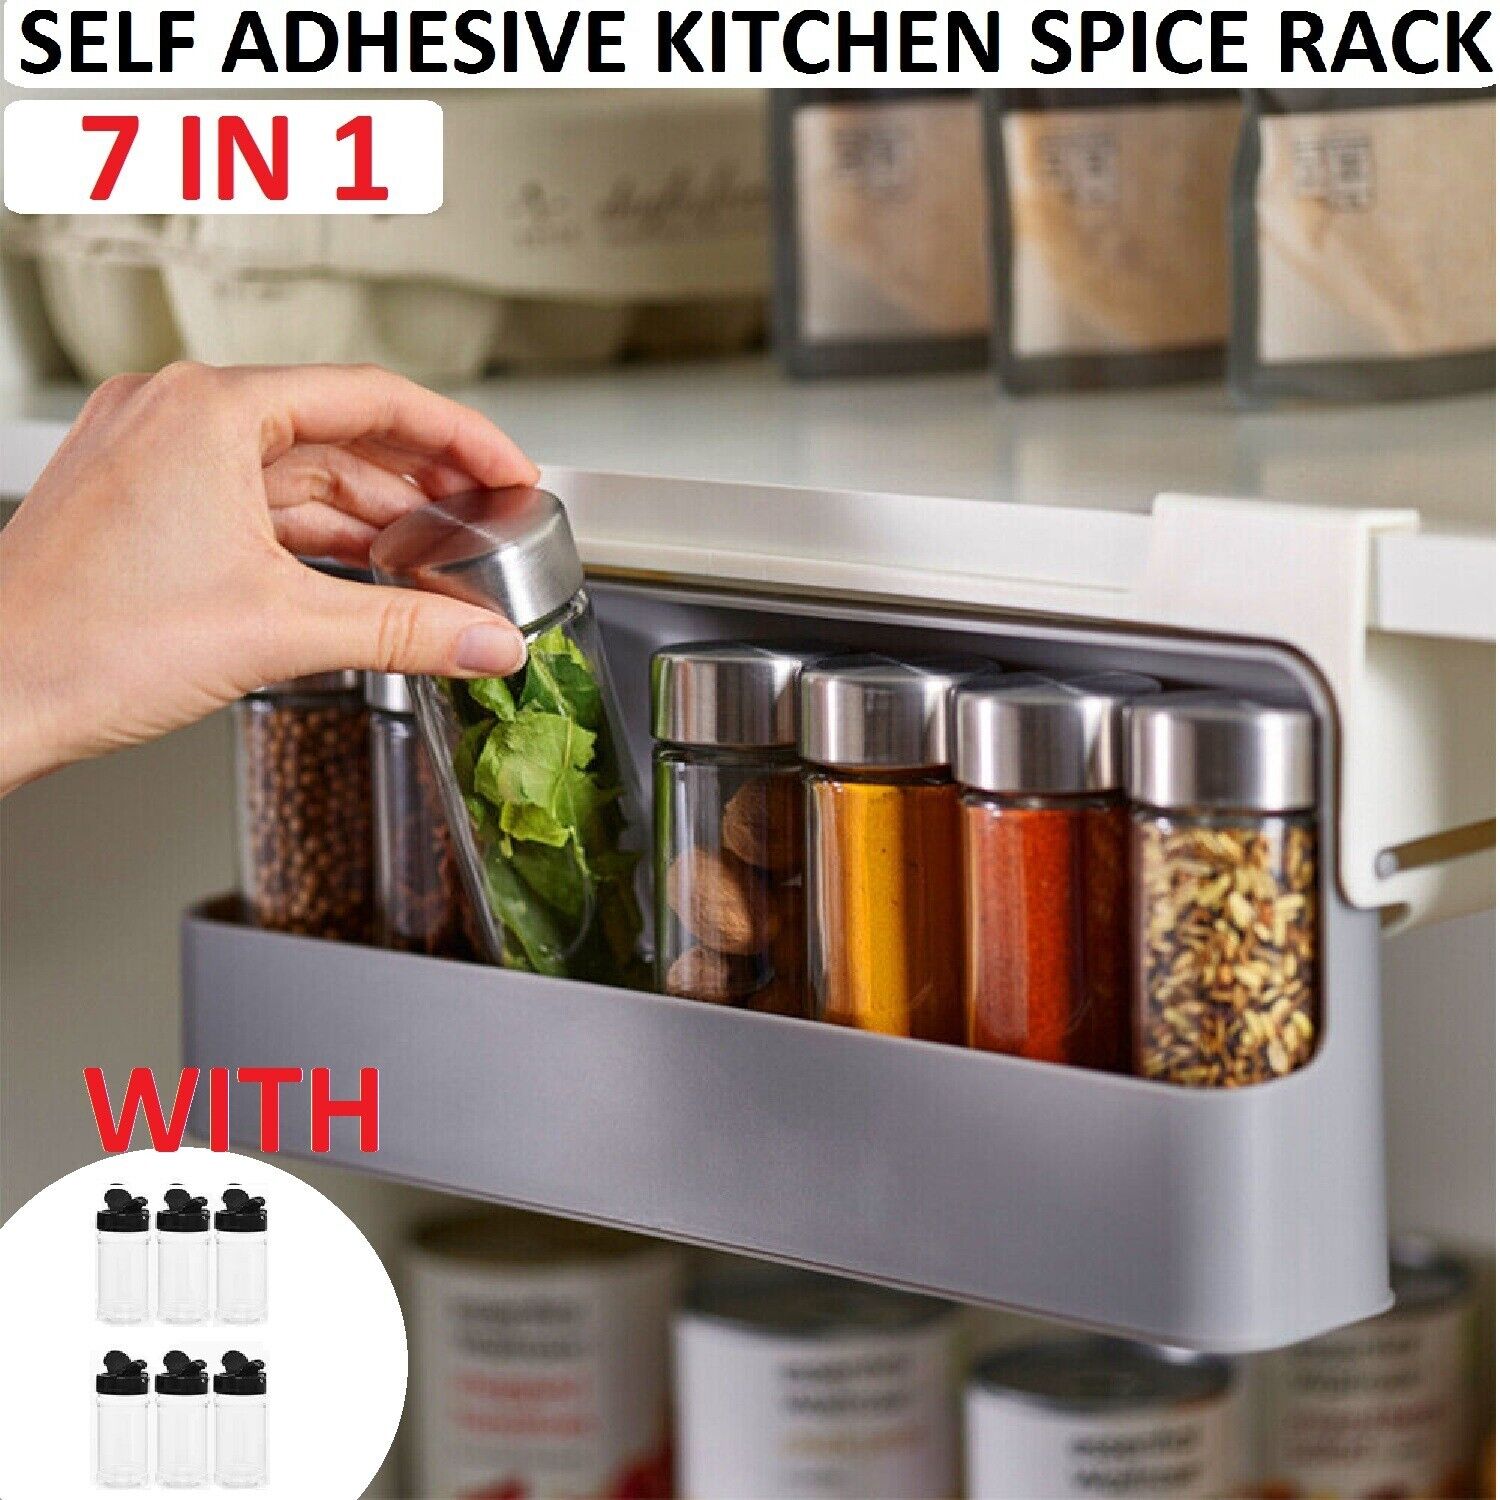 7 in 1 Self Adhesive Kitchen Spice Rack Jar Rack Organiser Storage Holder Shelf